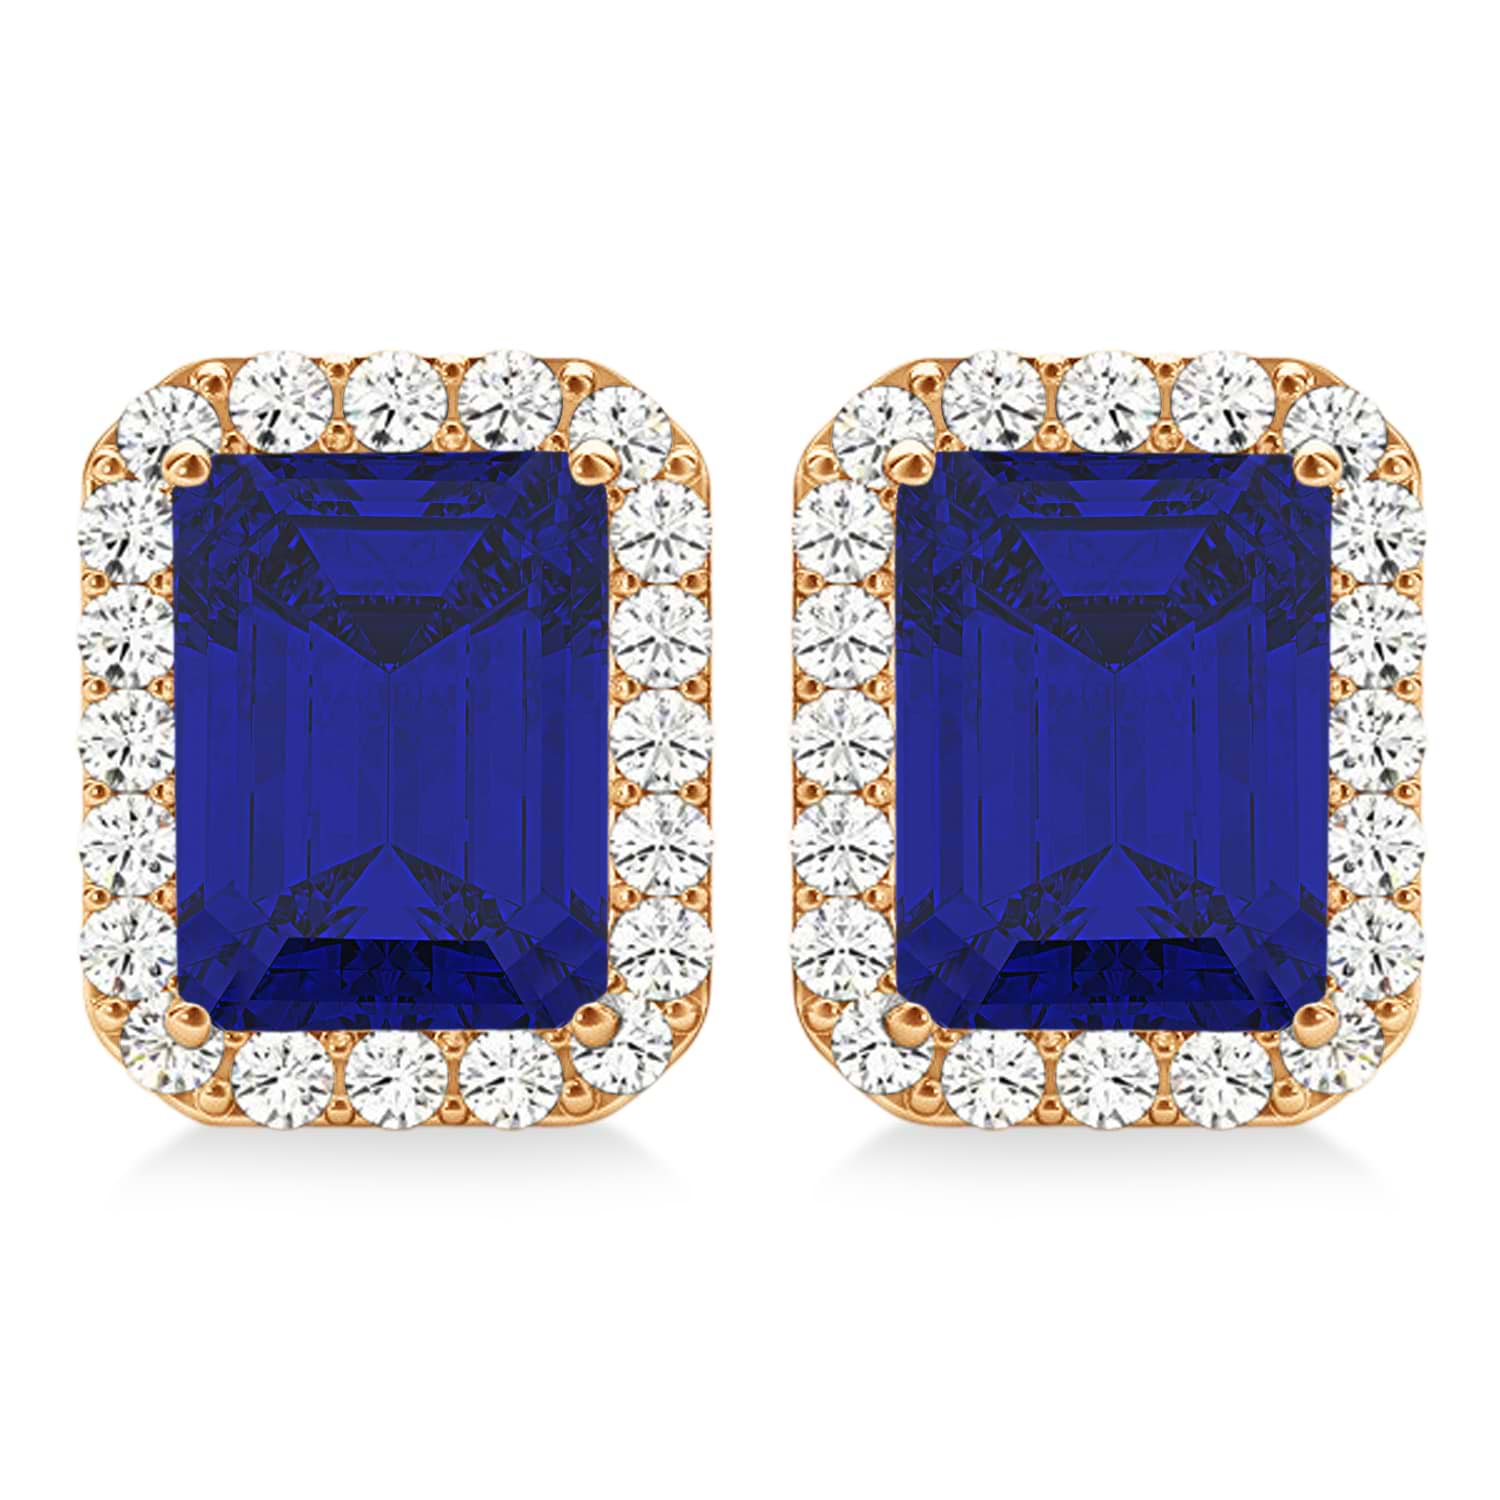 Emerald Cut Lab Blue Sapphire & Diamond Halo Earrings 14k Rose Gold (2.60ct)